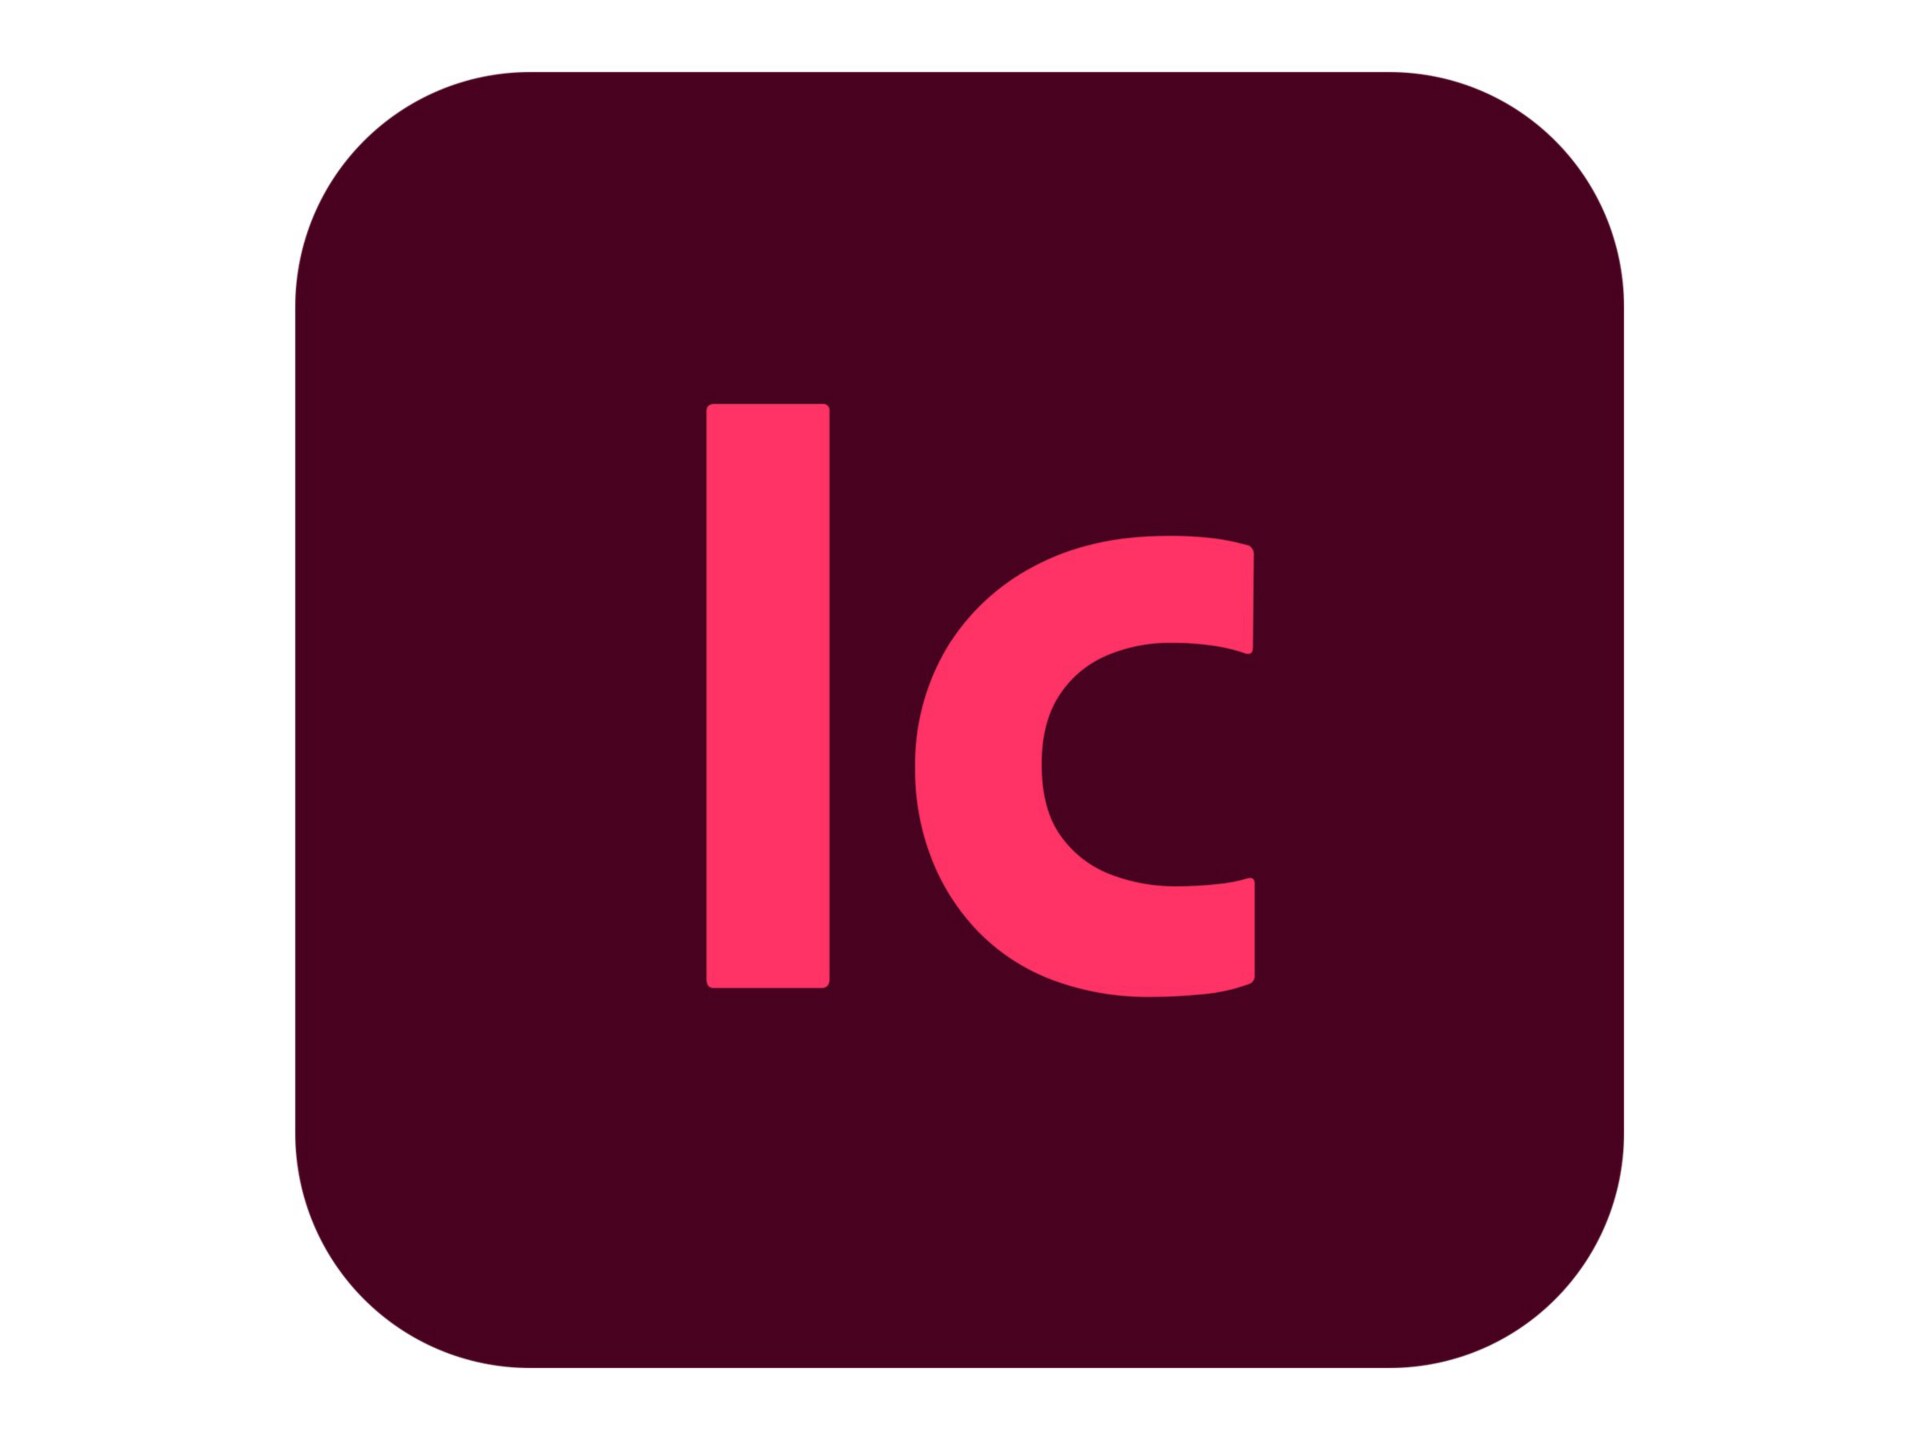 Adobe InCopy CC for Enterprise - Subscription New (7 months) - 1 named user